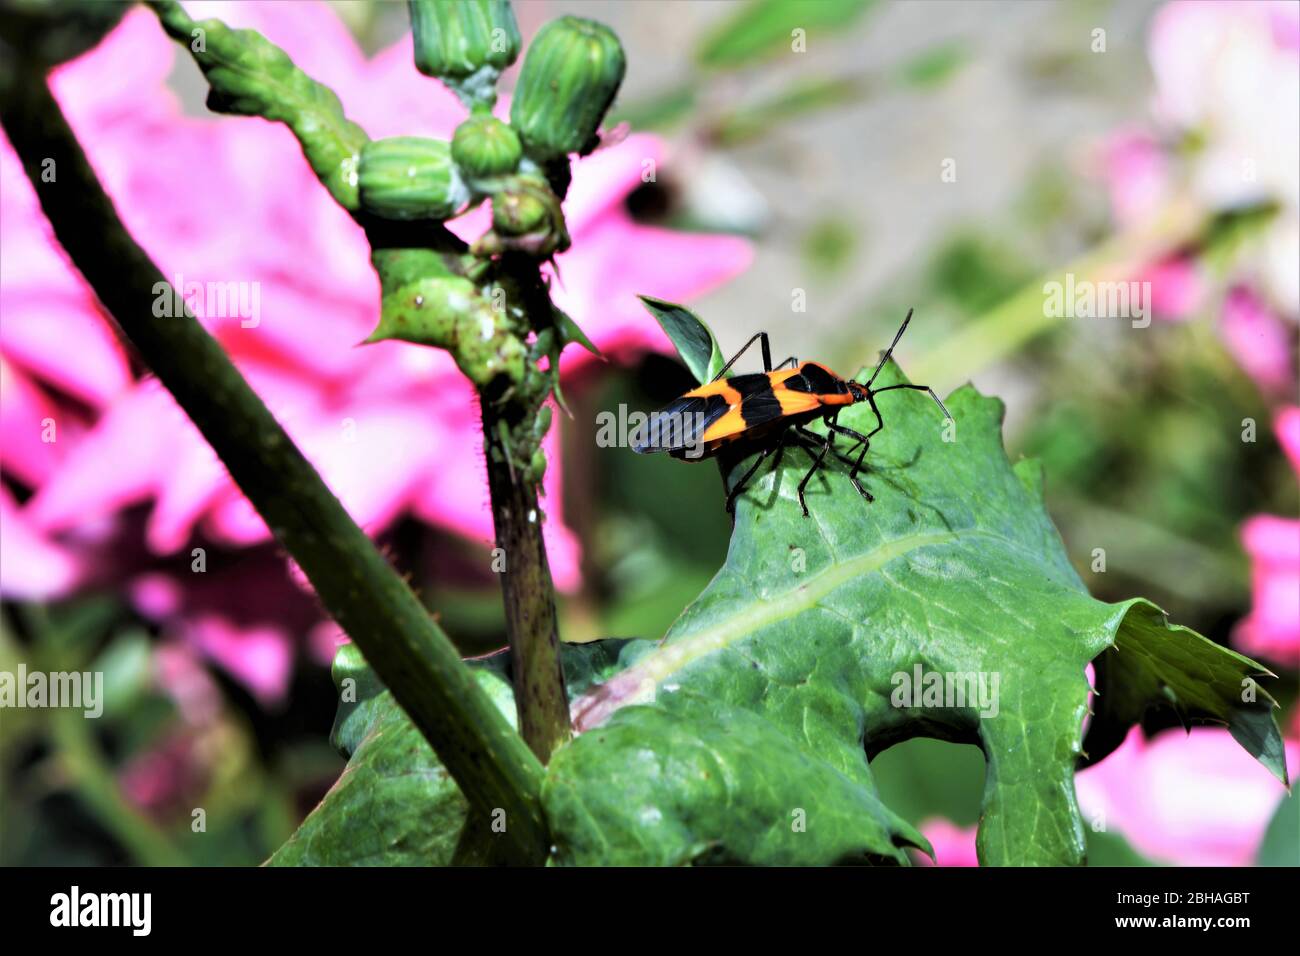 A milkweed assassin bug rests on the leaf of a rose bush. Stock Photo